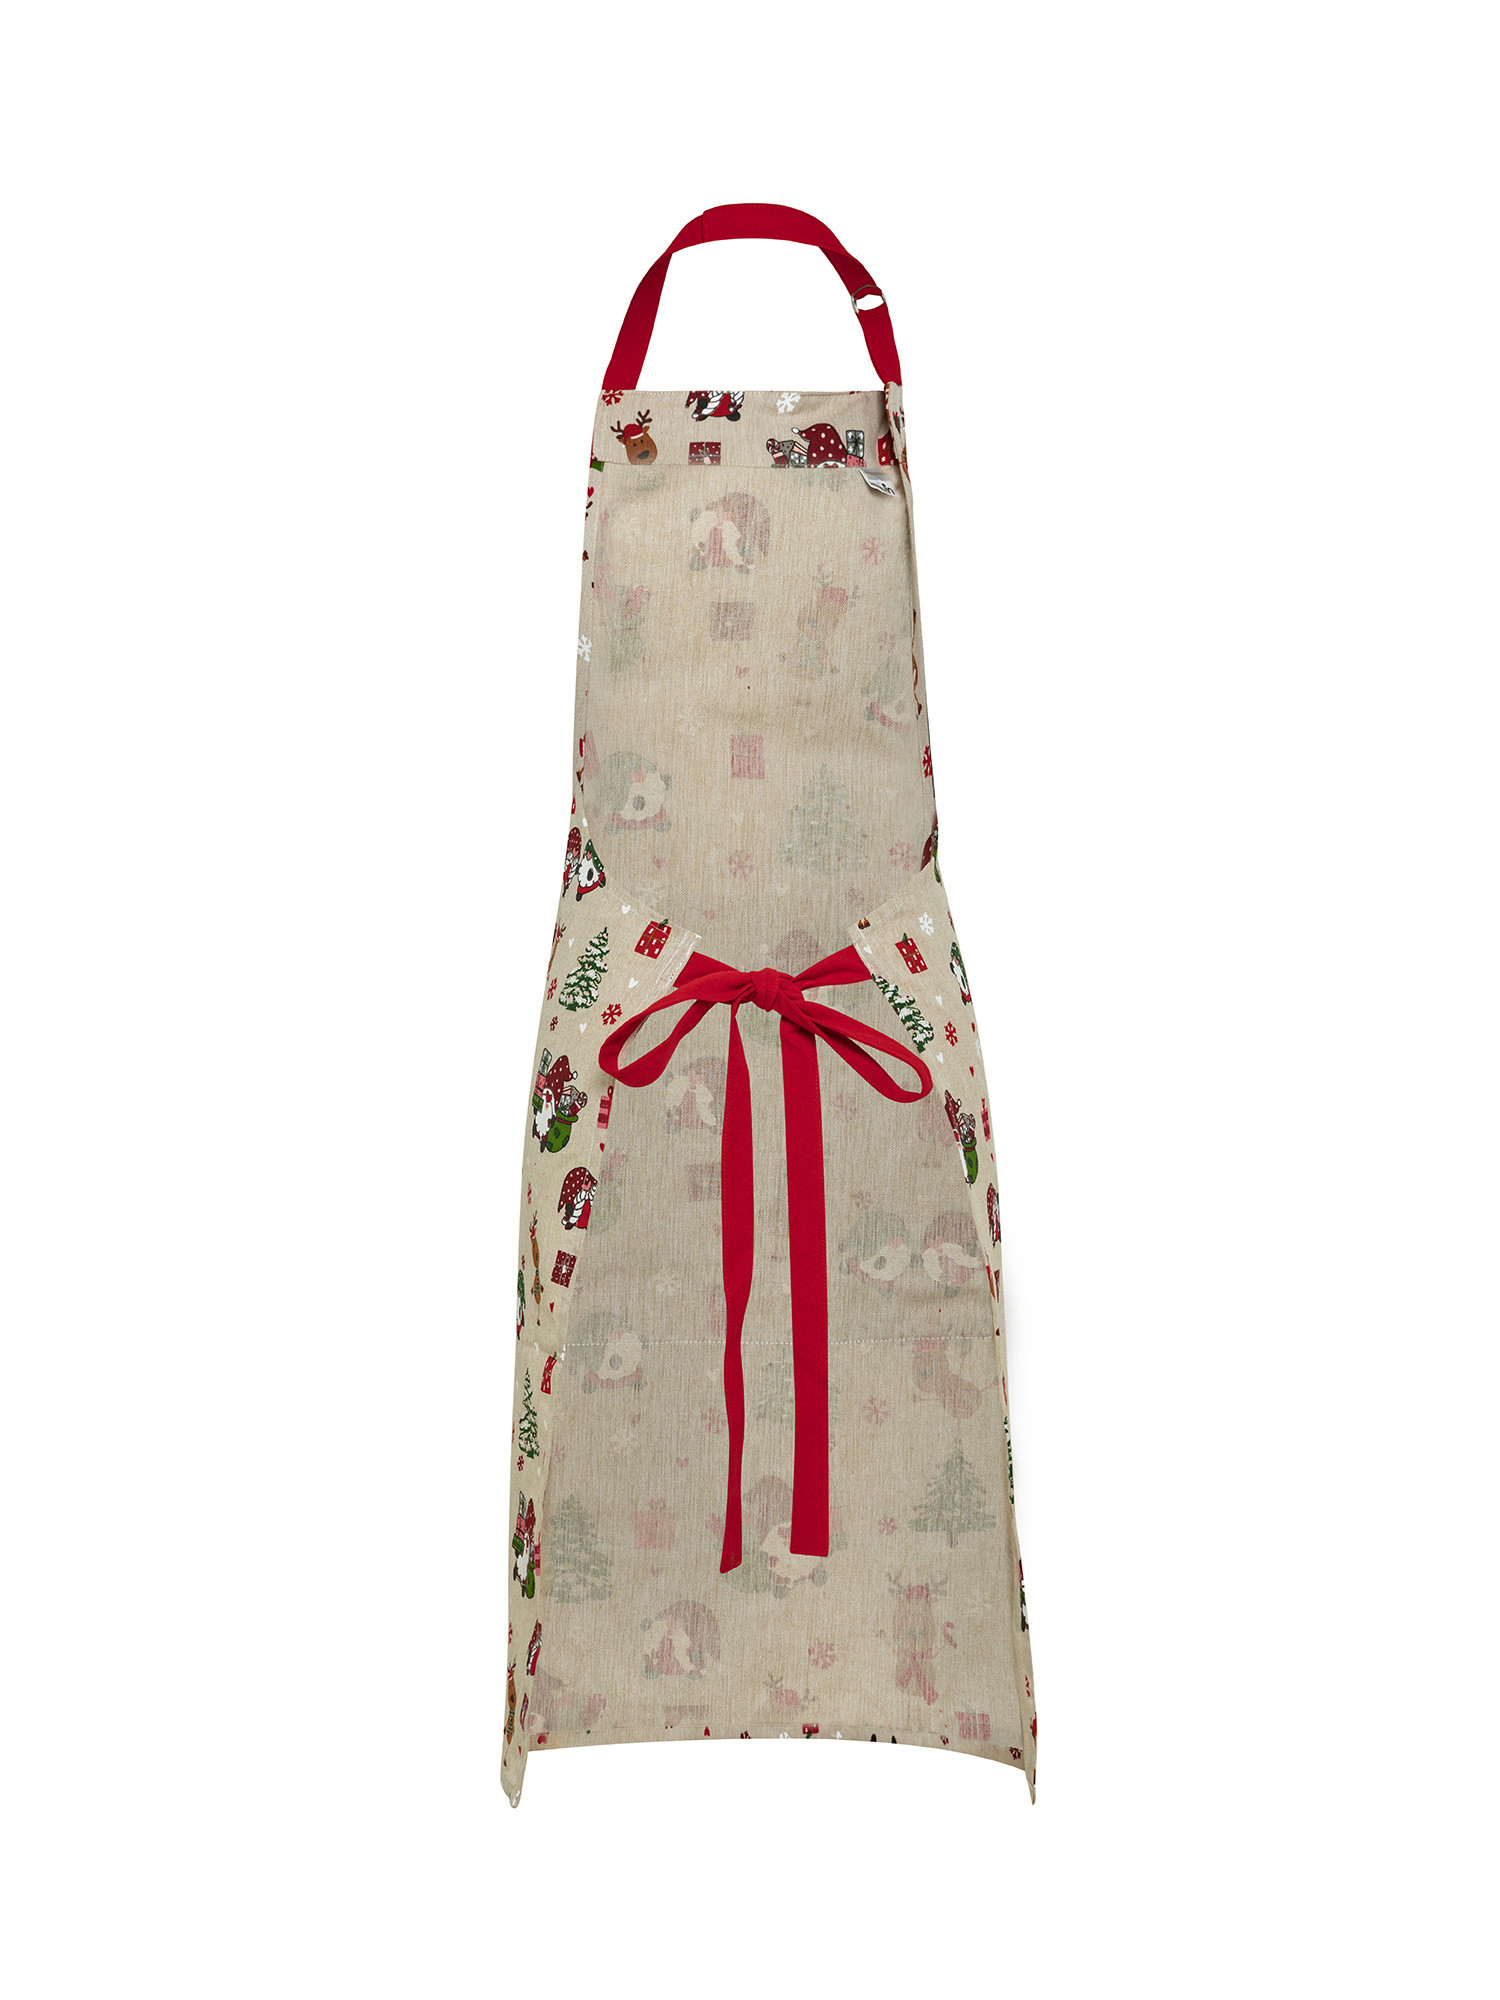 Grembiule da cucina panama di cotone stampa natalizia, Beige, large image number 1